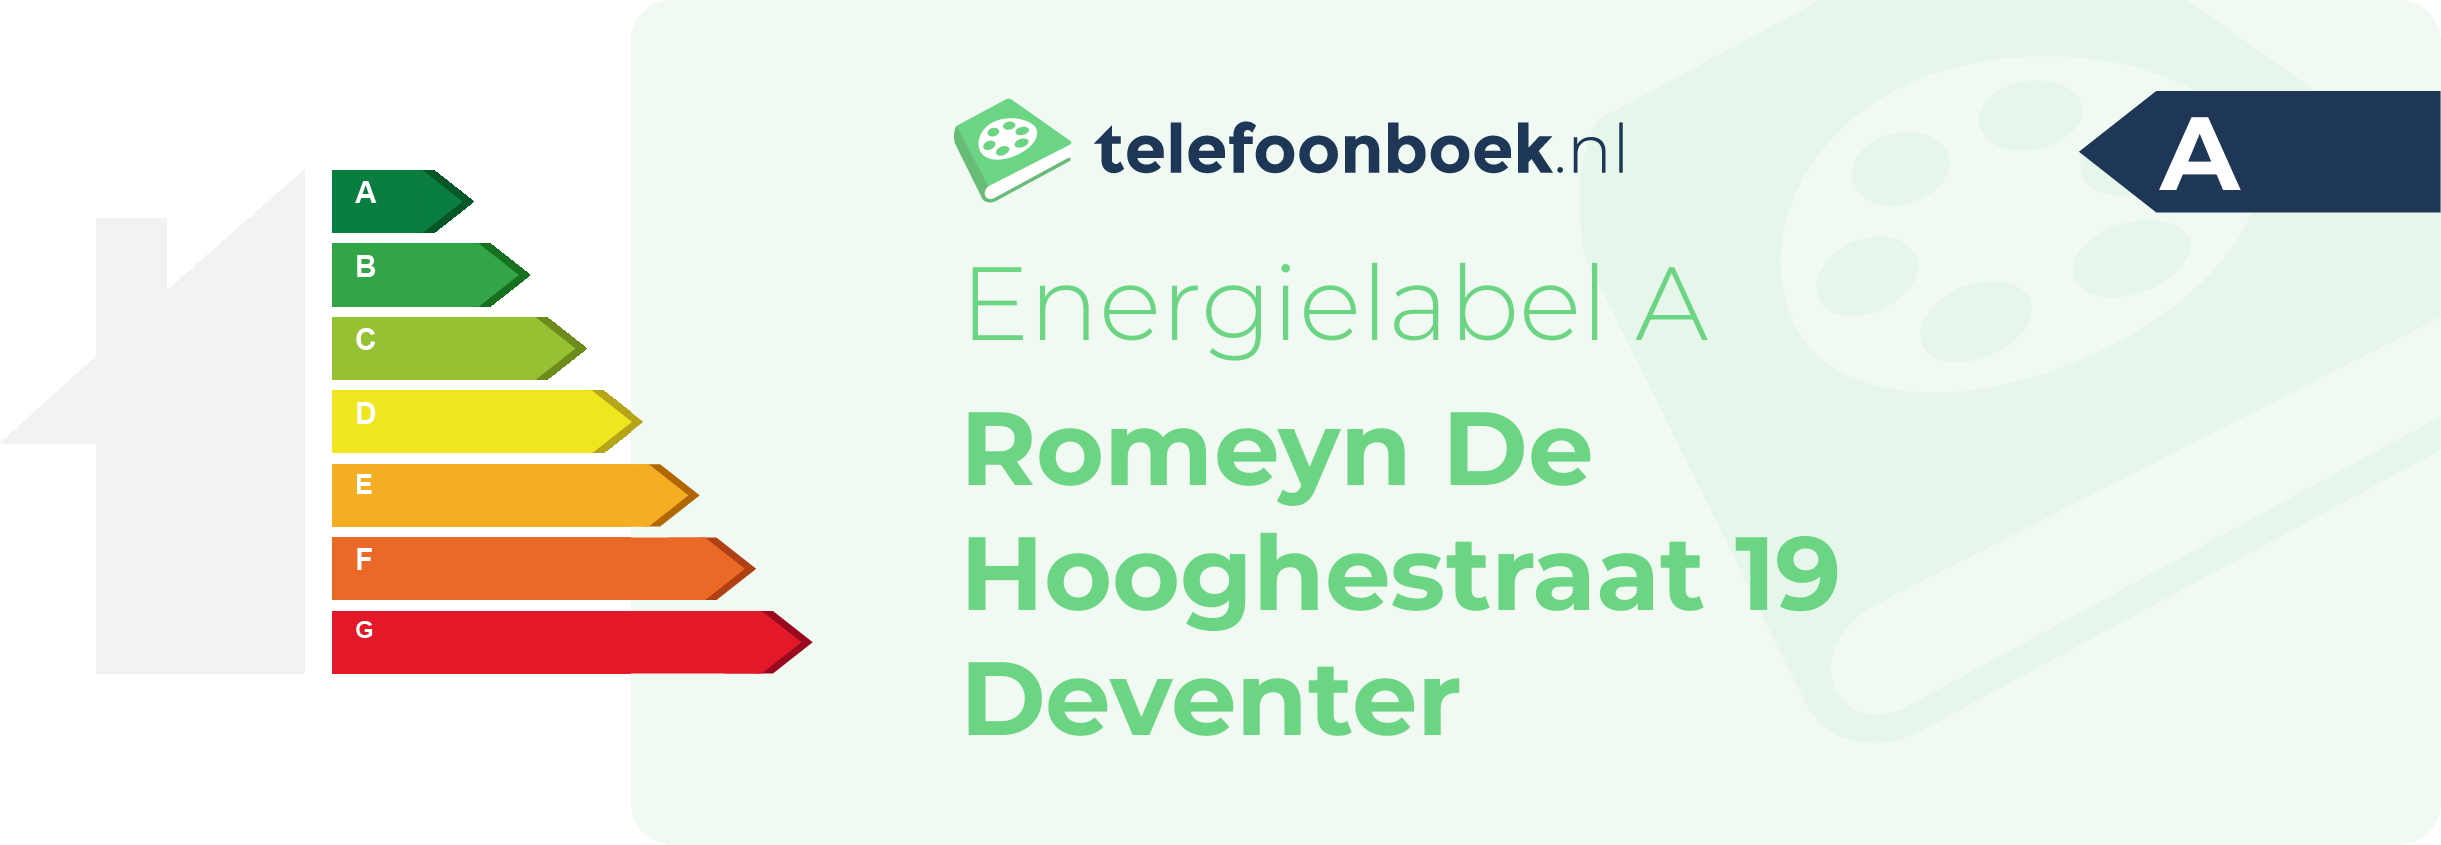 Energielabel Romeyn De Hooghestraat 19 Deventer